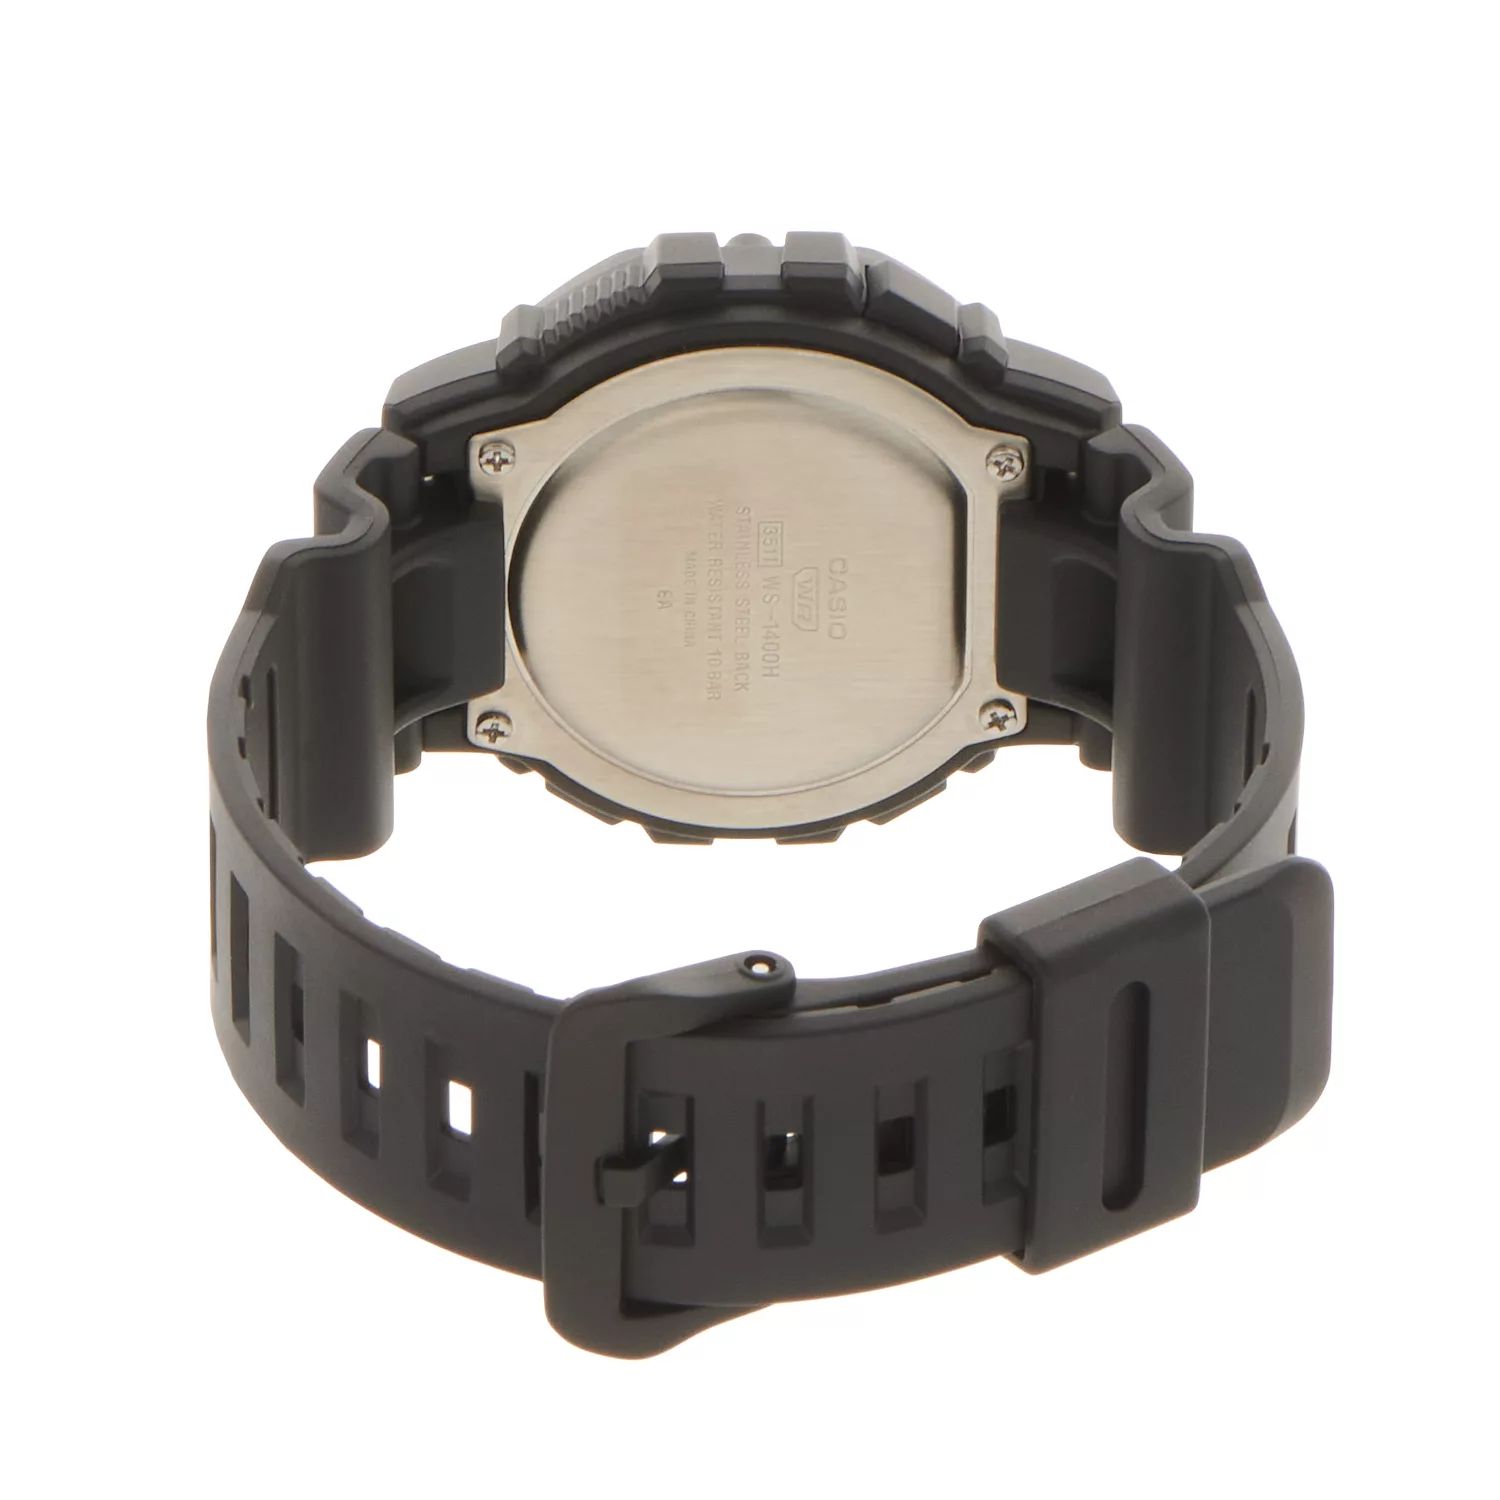 Цифровые беговые часы Sports Gear — WS1400H-1AV Casio цена и фото